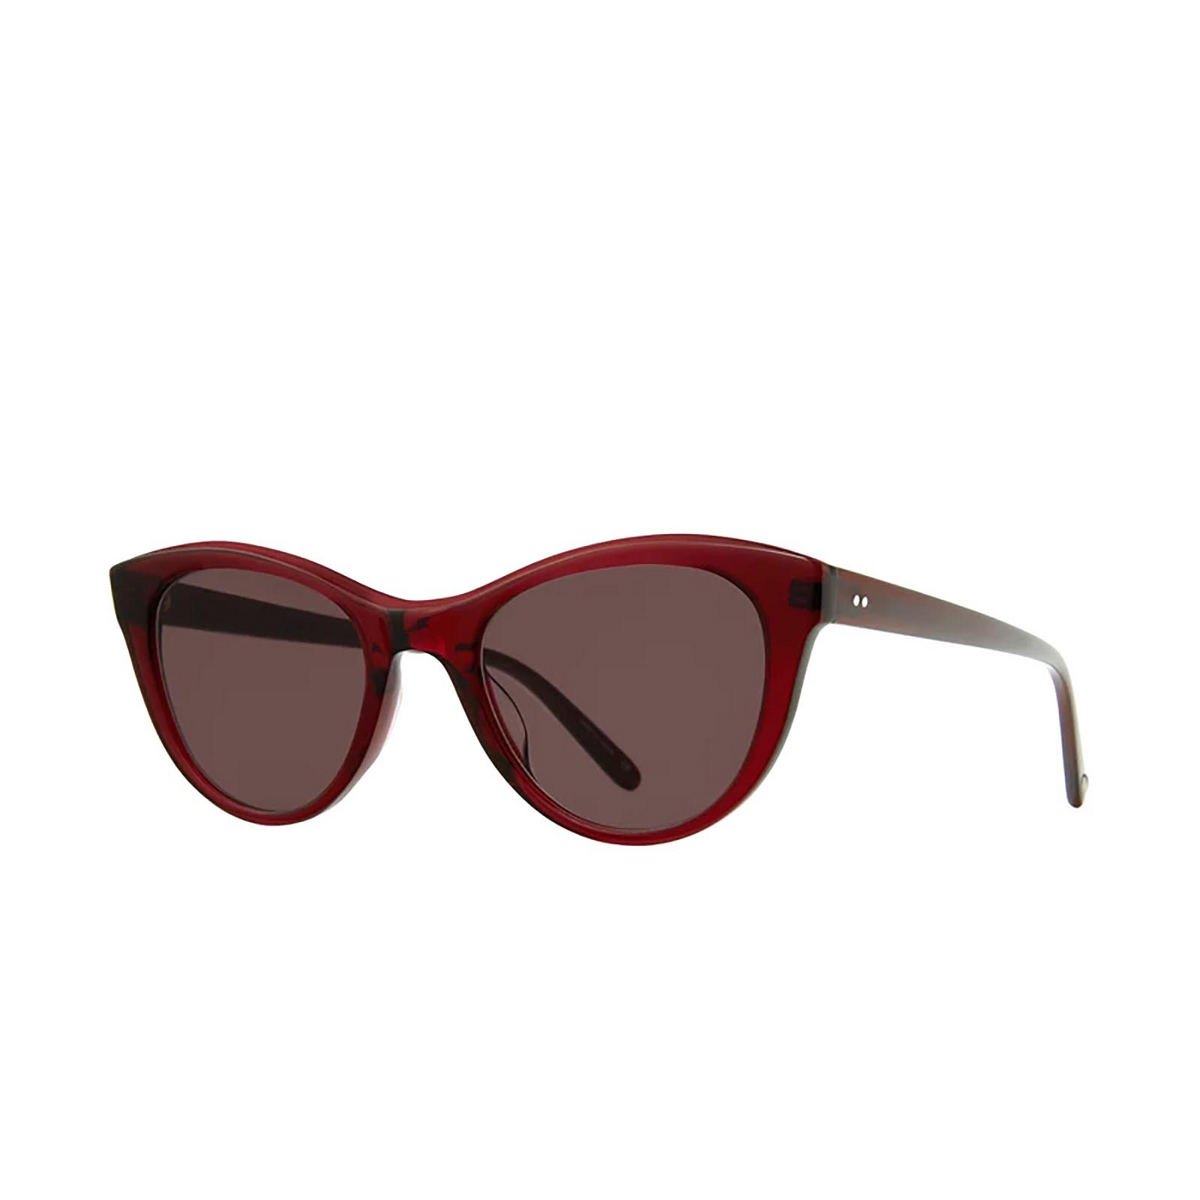 Garrett Leight® Cat-eye Sunglasses: Glco X Clare V. Sun color Merlot Mer - three-quarters view.